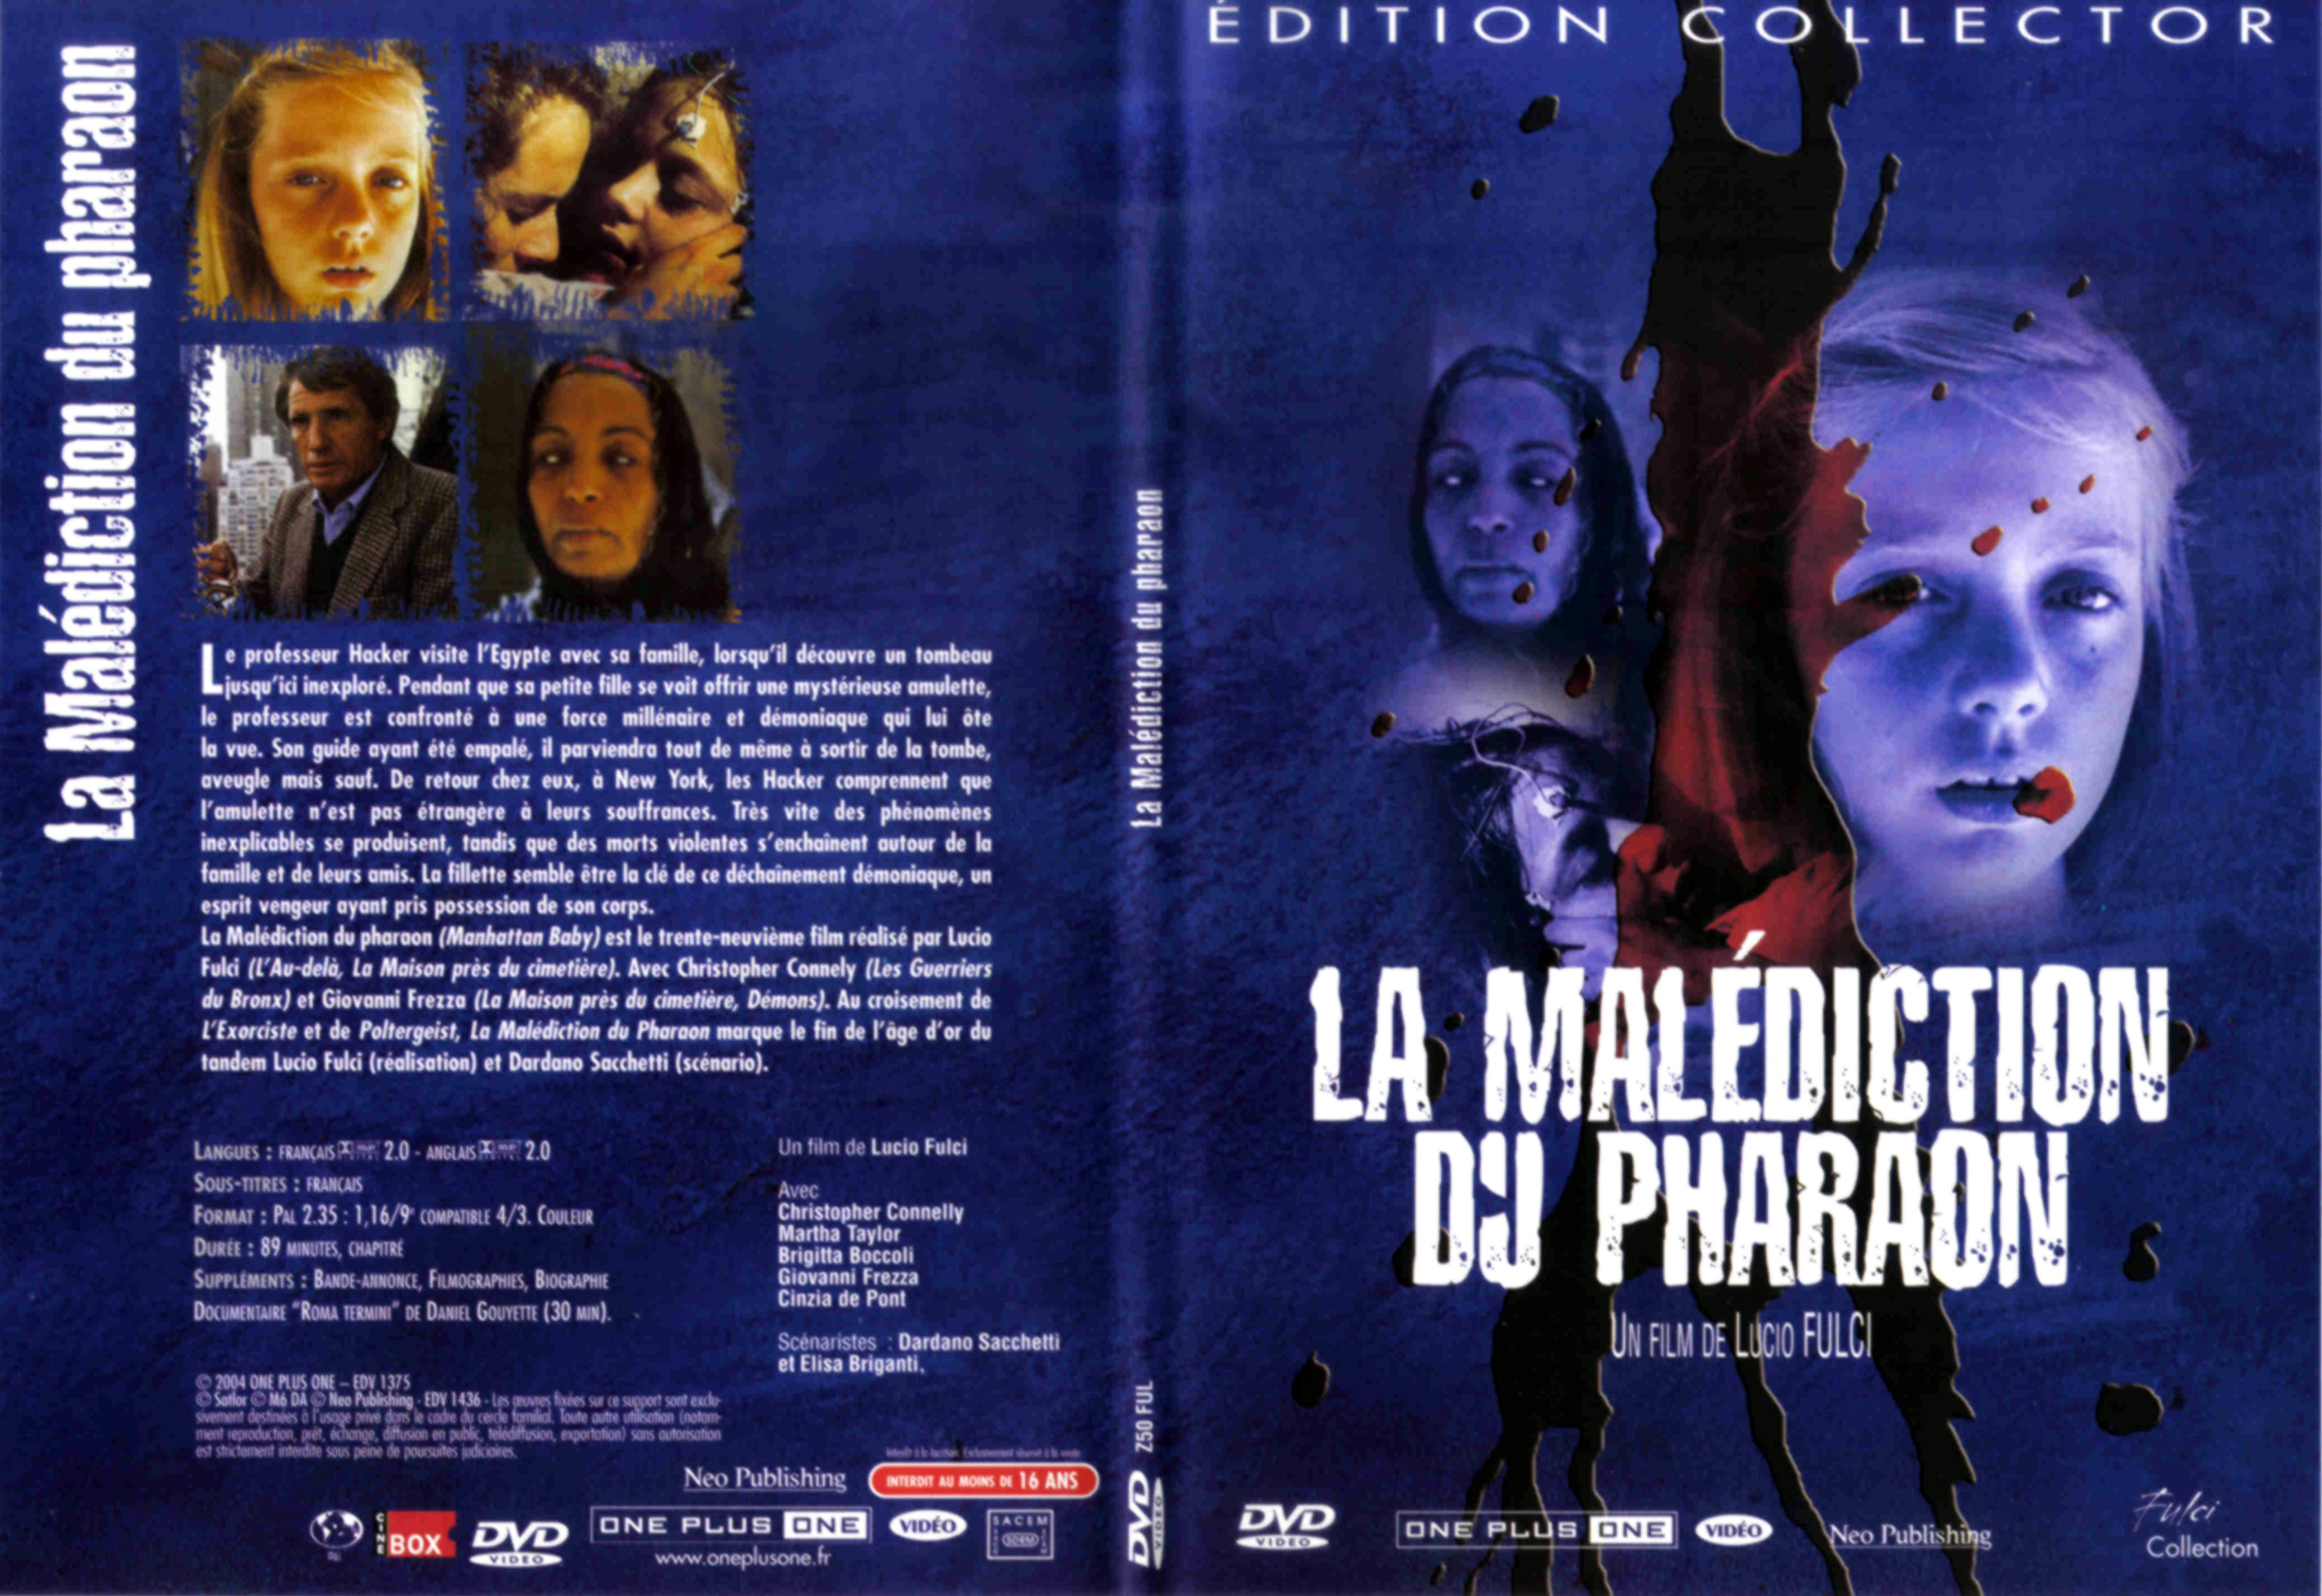 Jaquette DVD La malediction du pharaon v2